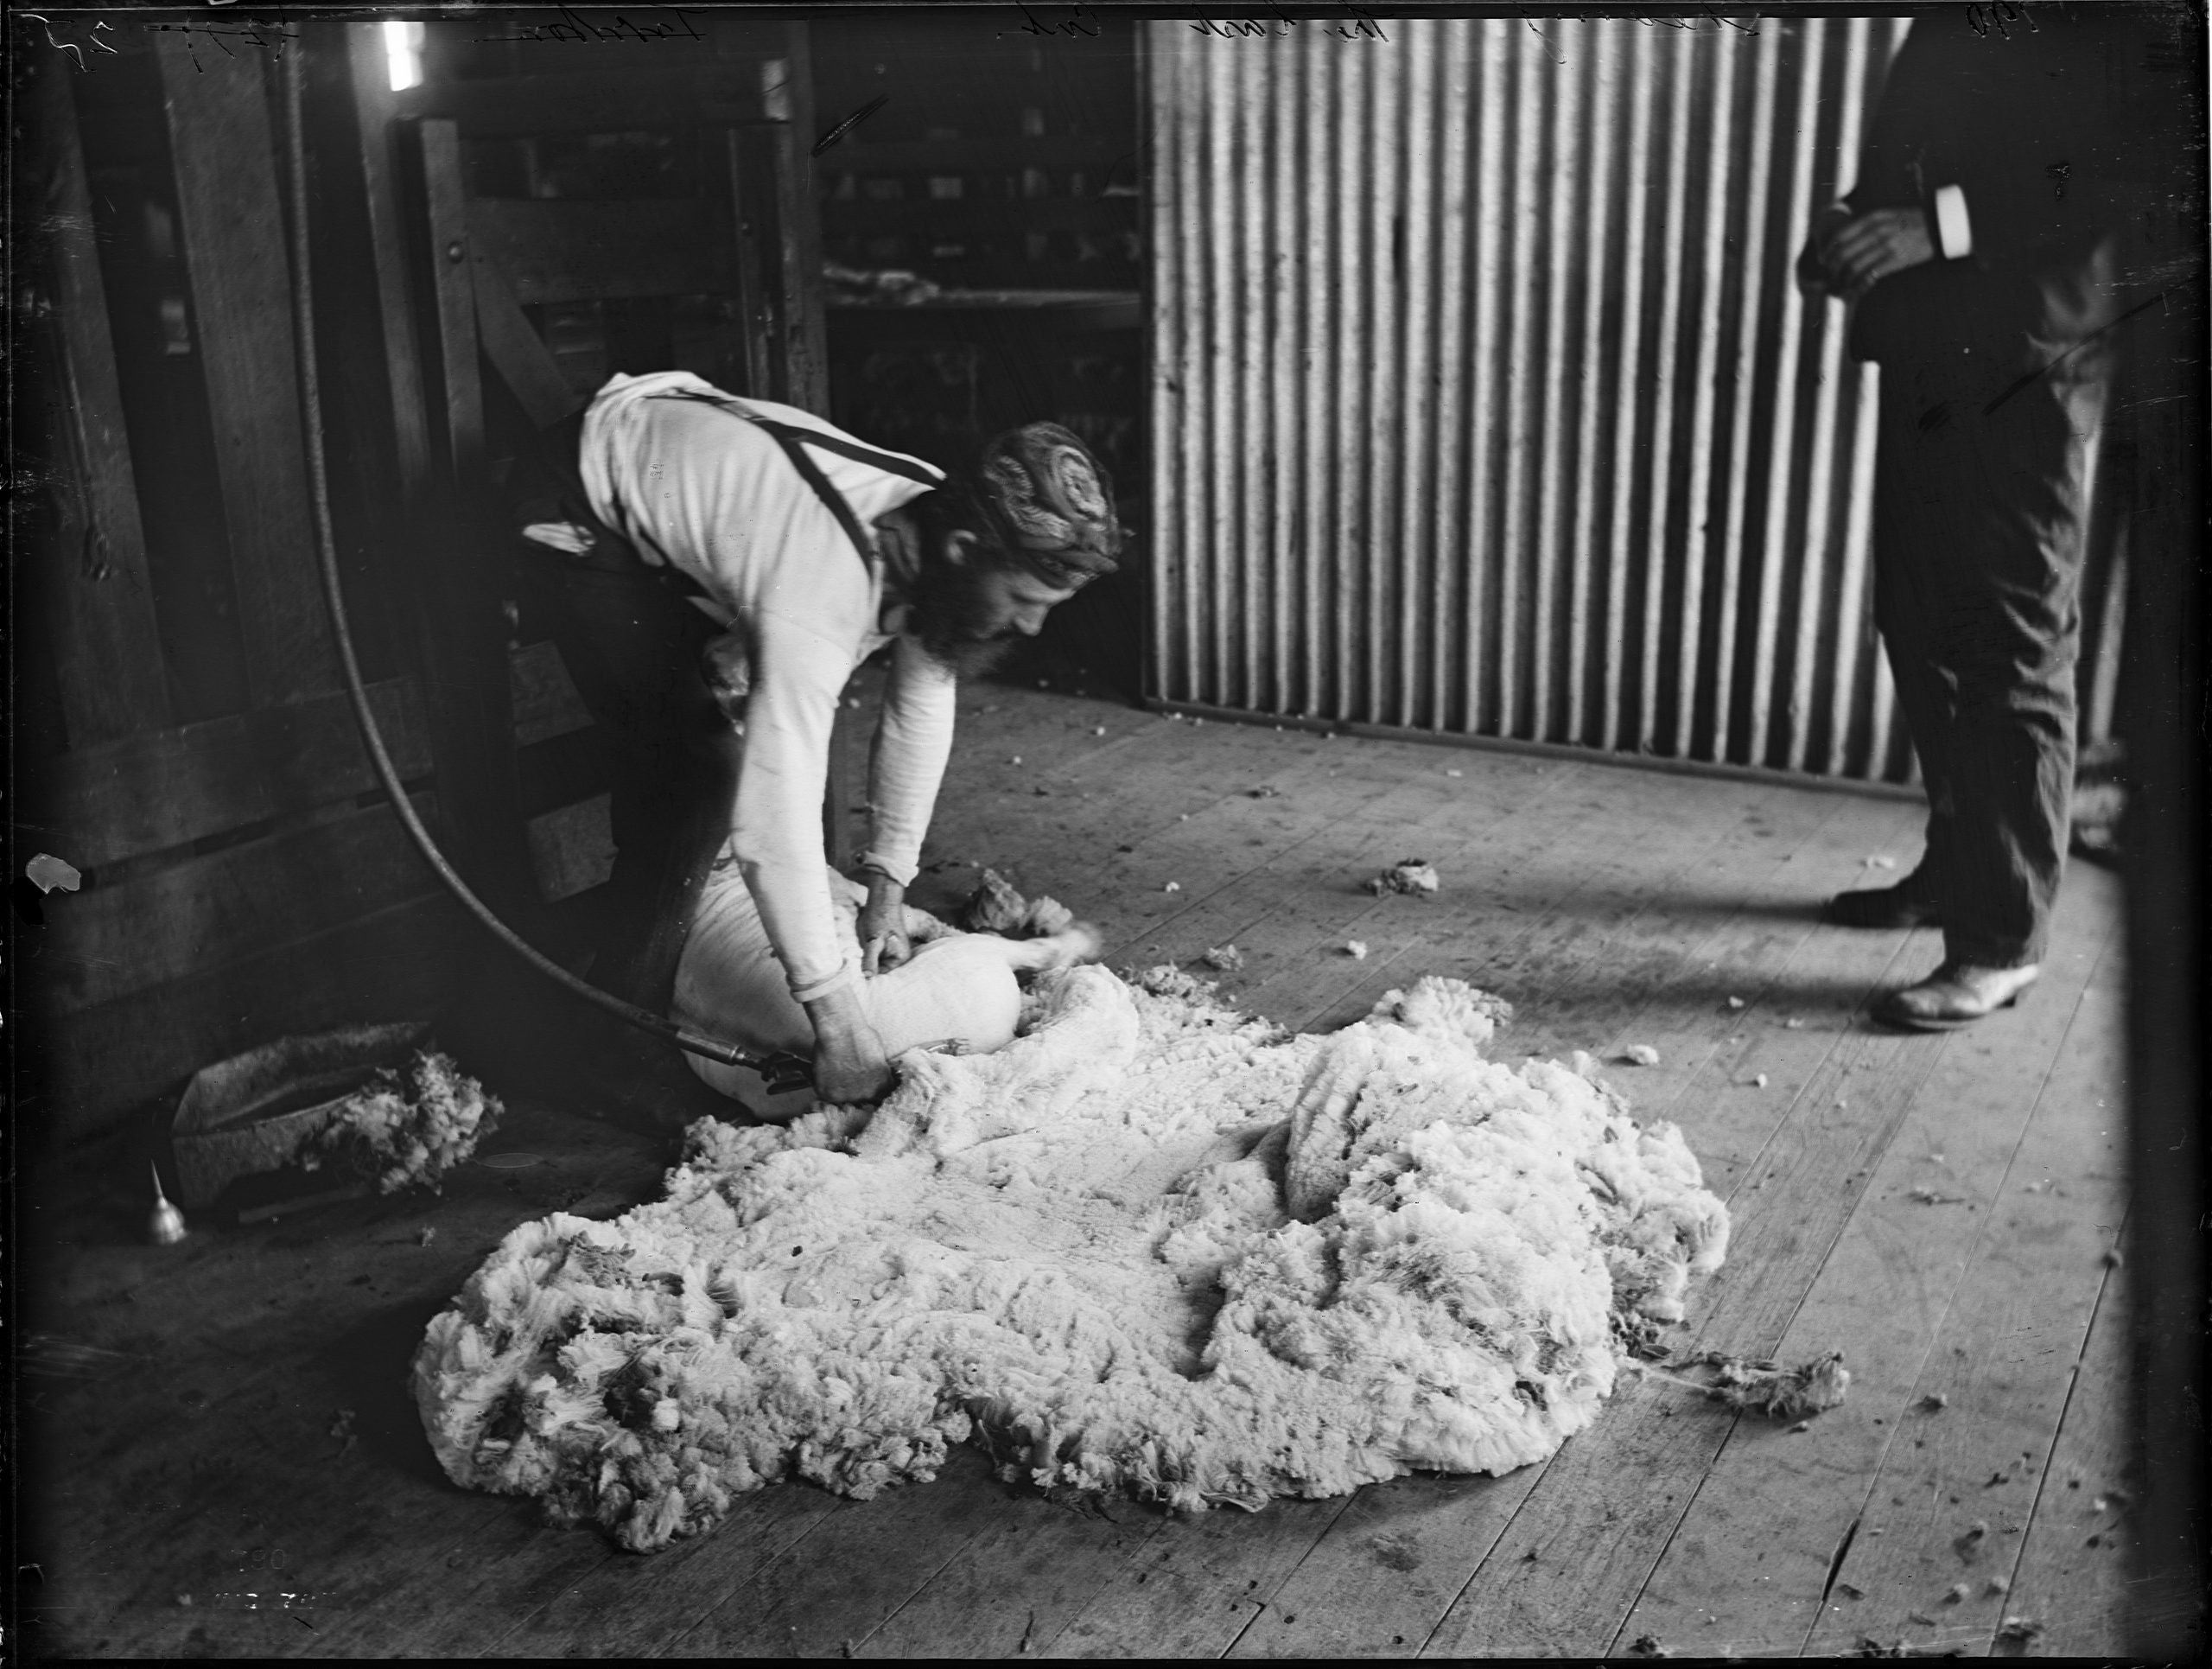 Shearing the last cut of wool